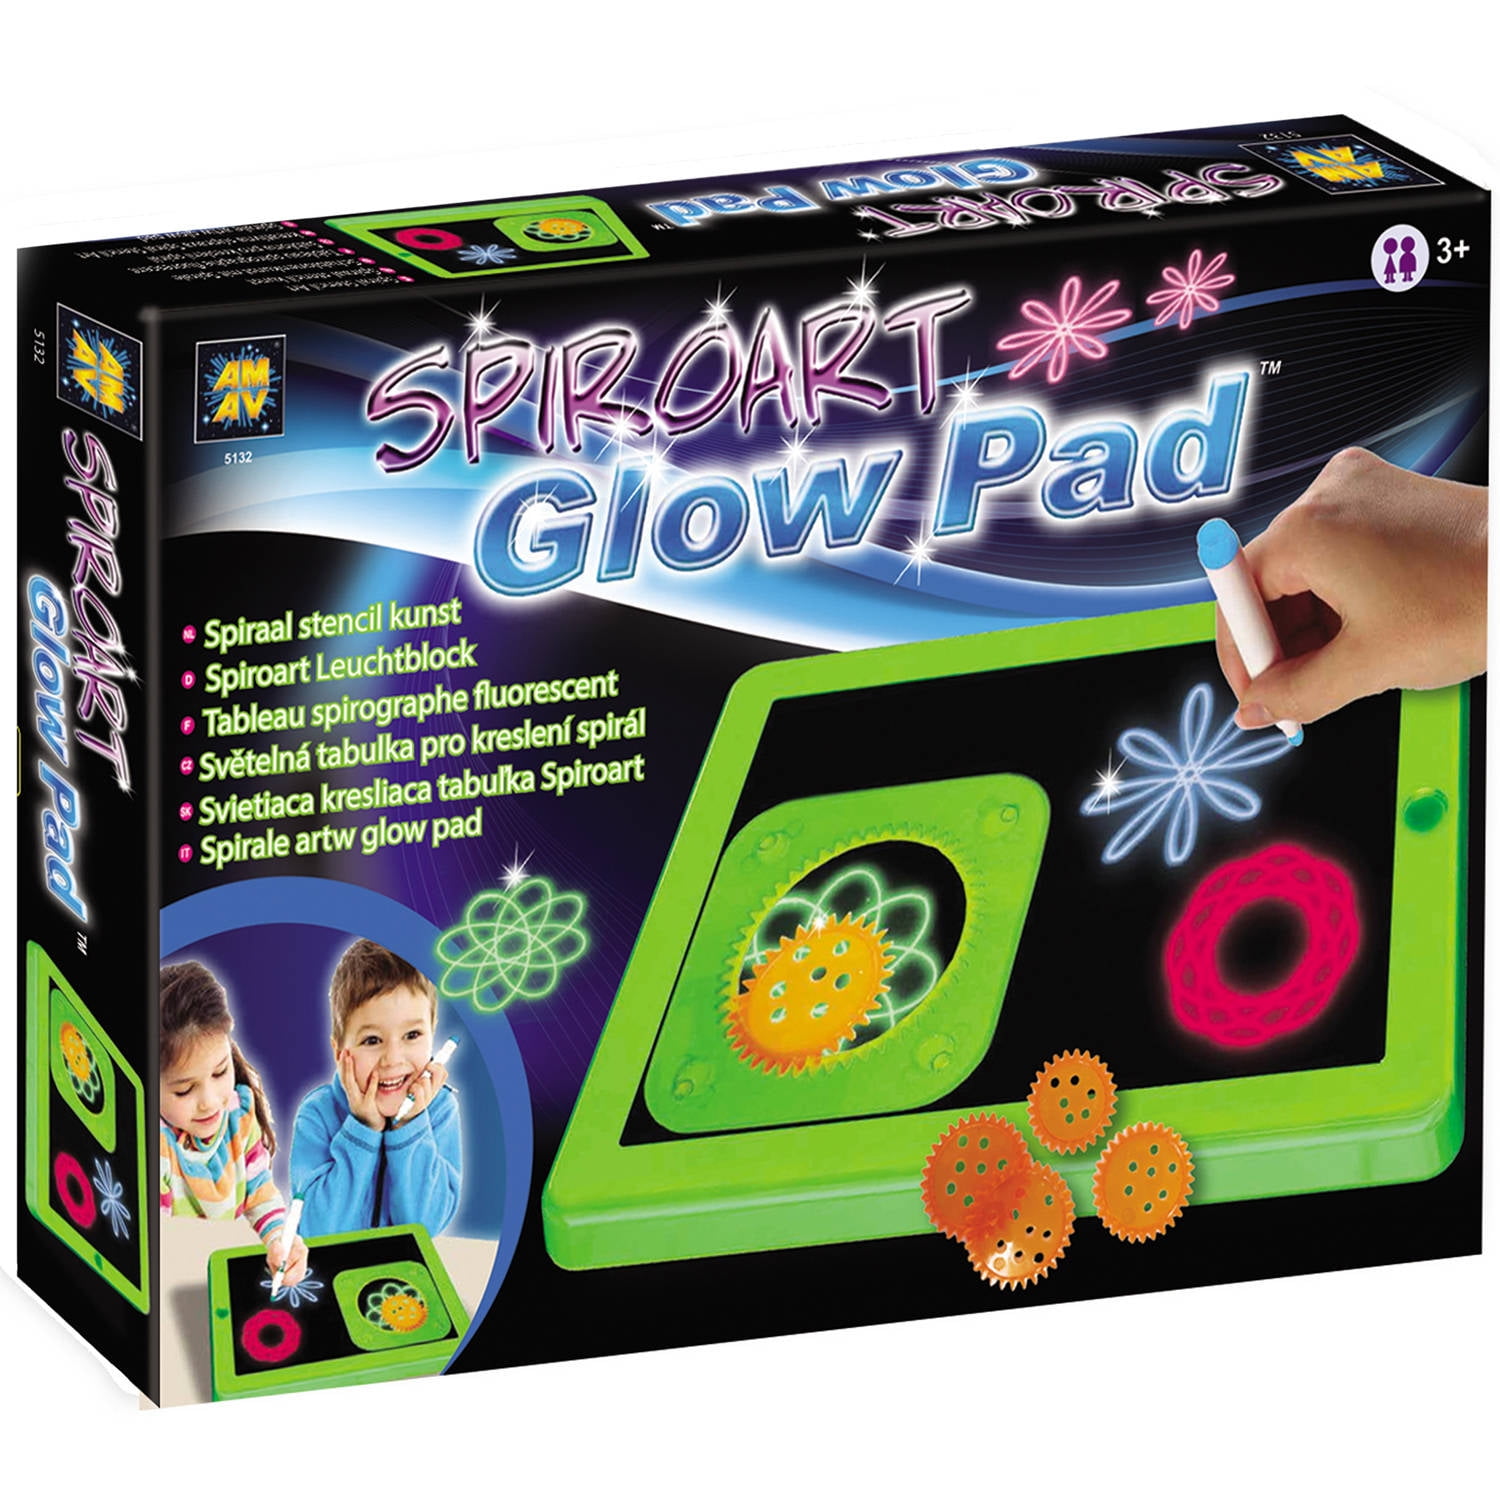 Развивающая игра Mindscope Light up led Glow Pad Pink Animator with Glow Markers New игрушки. Маркетплейсы игрушки